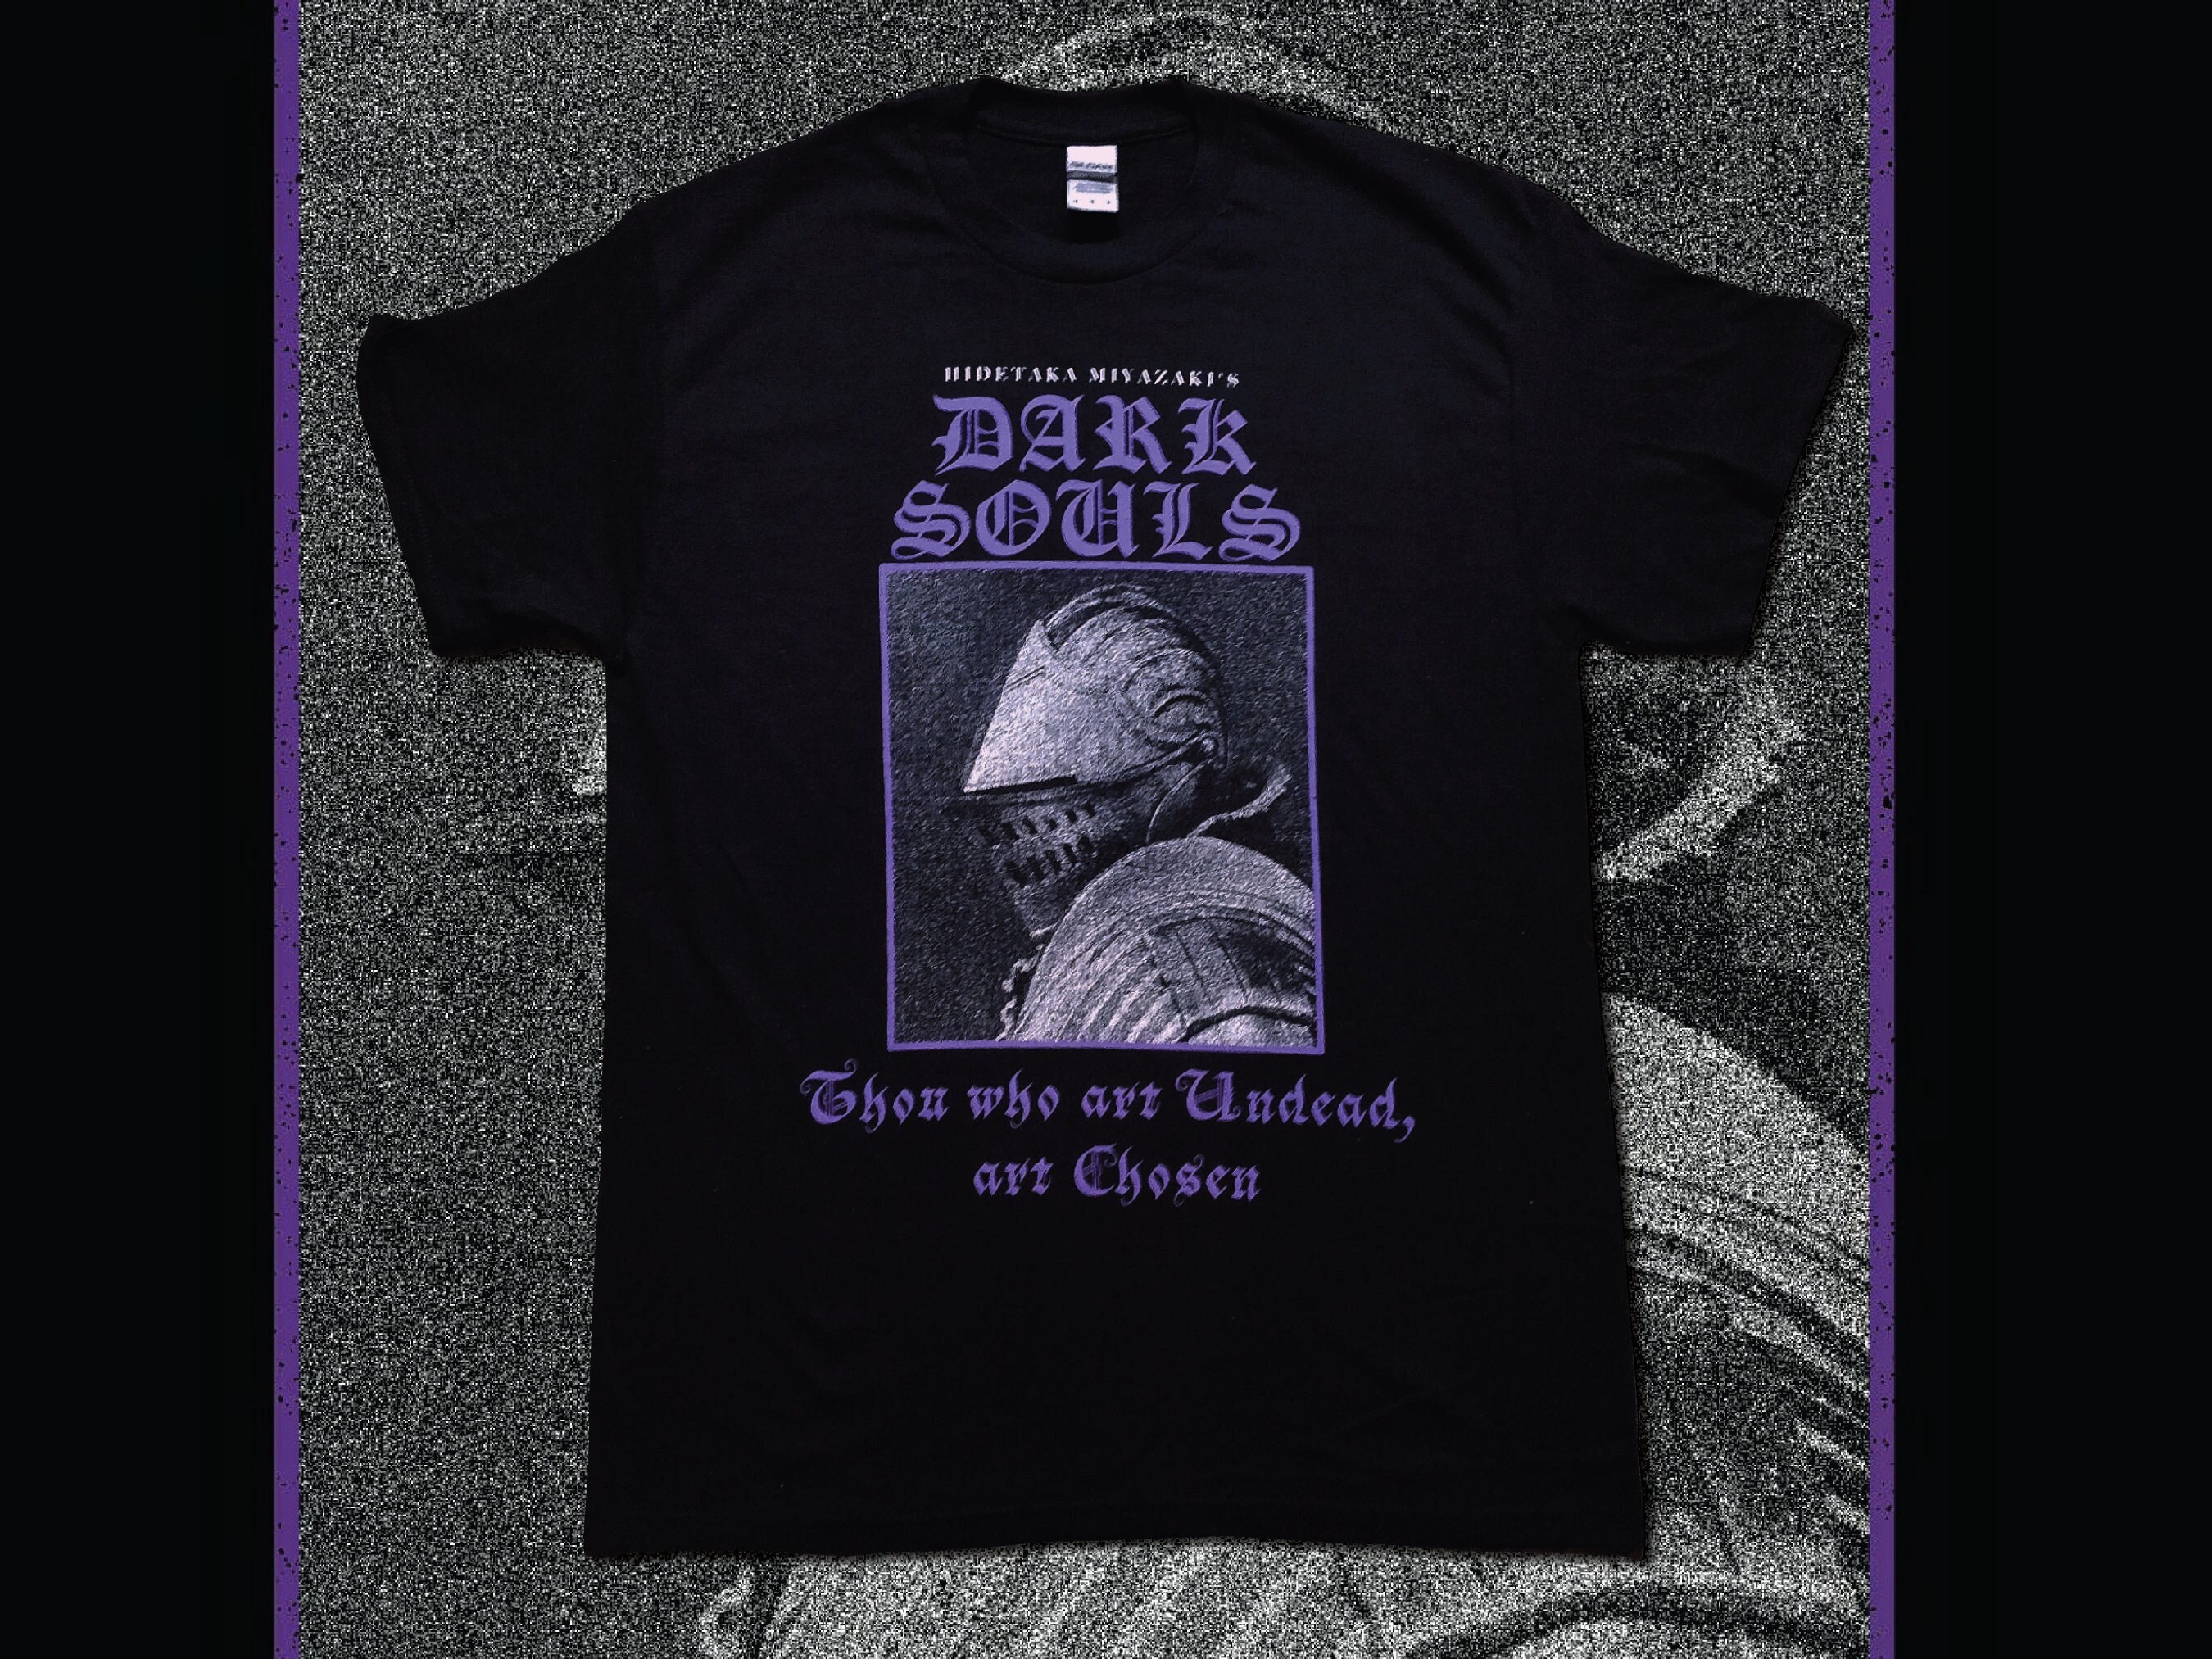 Darker T-Shirts for Sale